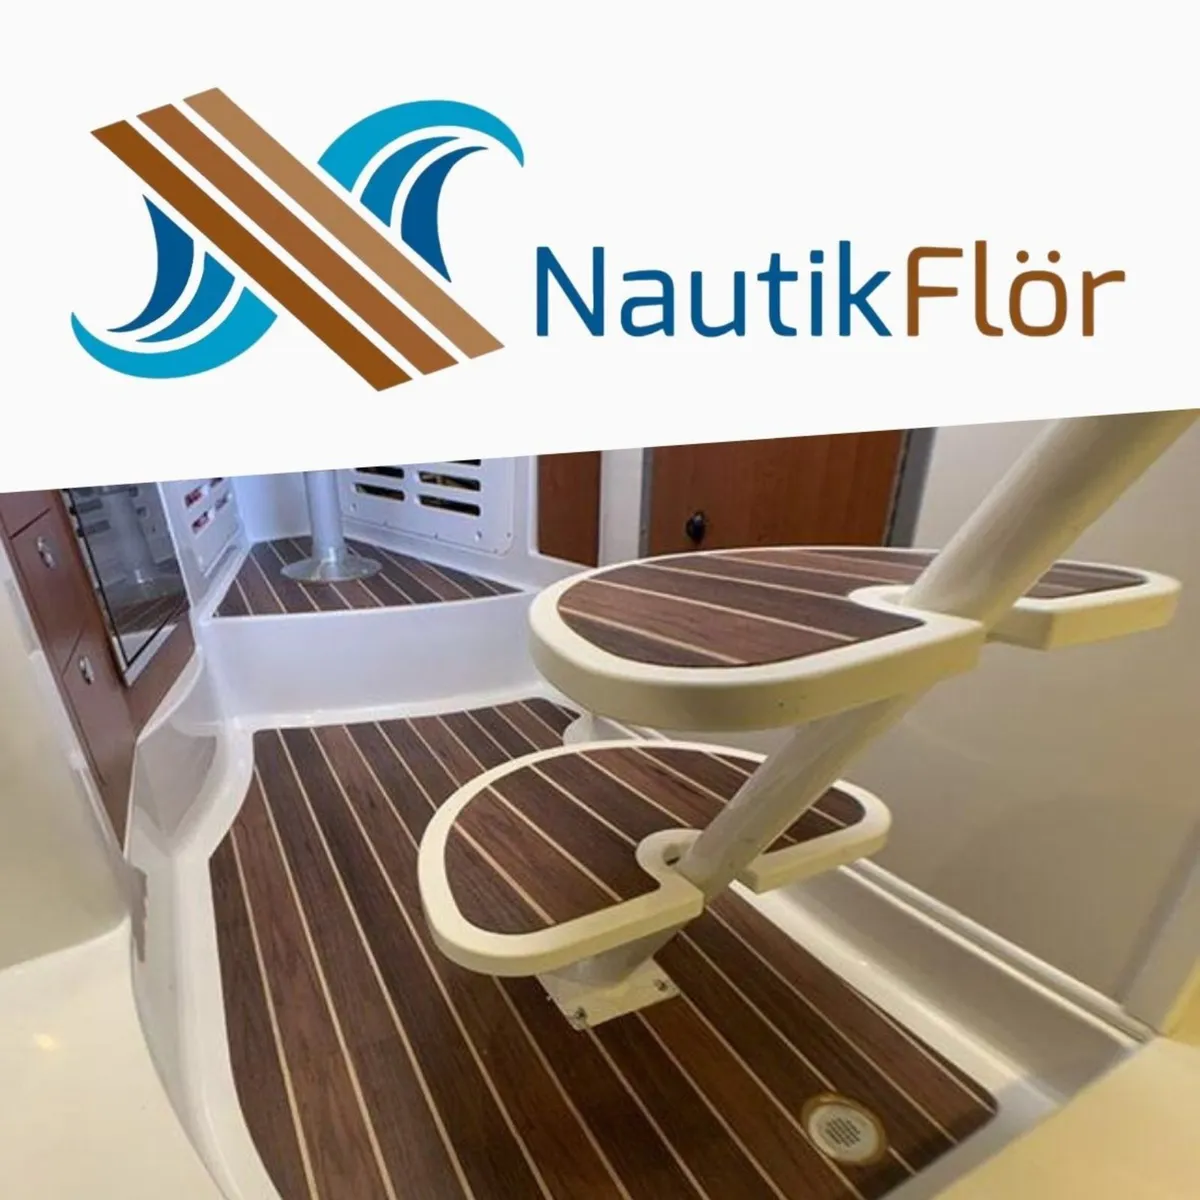 NautikFlor Marine Flooring - Image 1